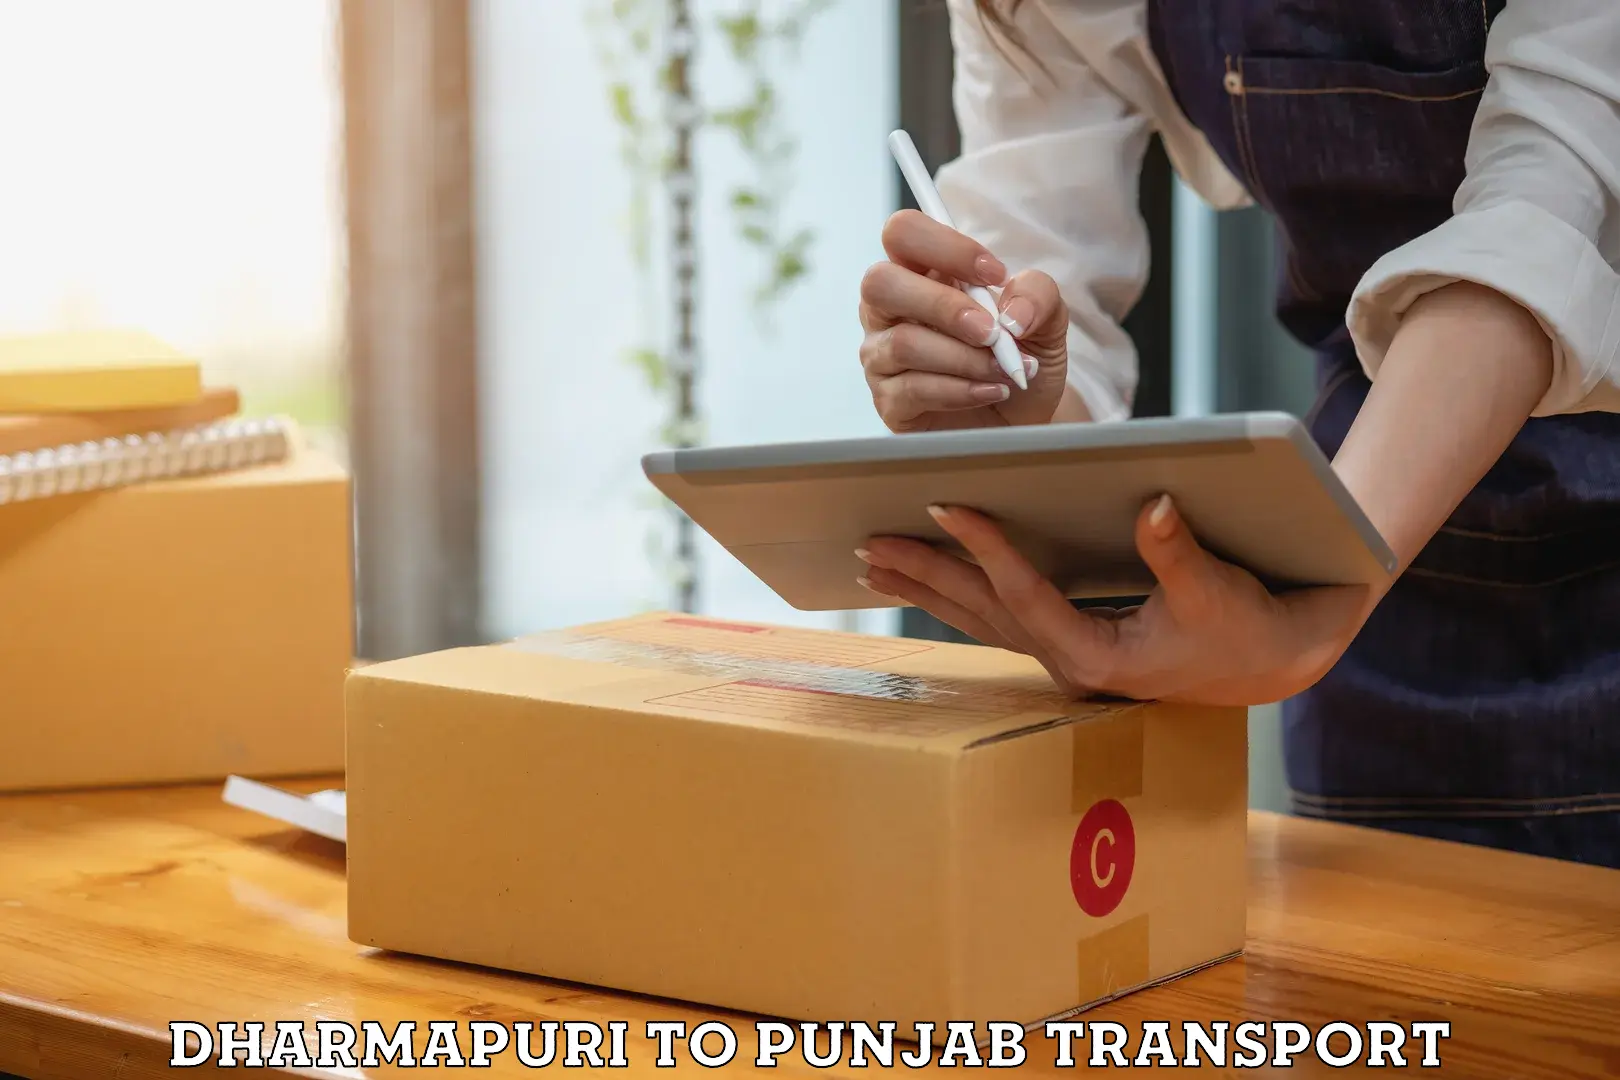 Delivery service Dharmapuri to Muktsar